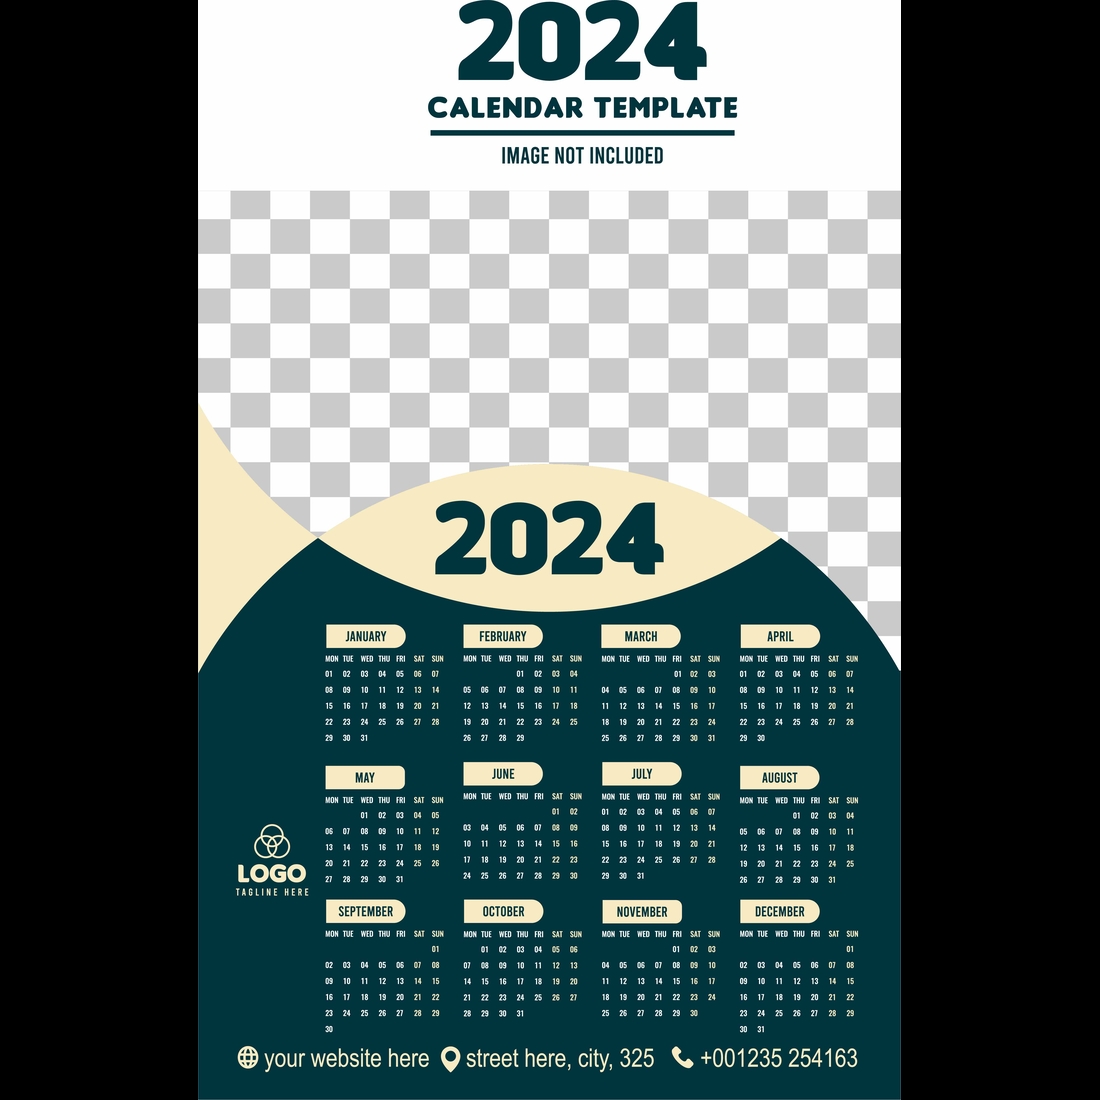 2024 Calender design preview image.